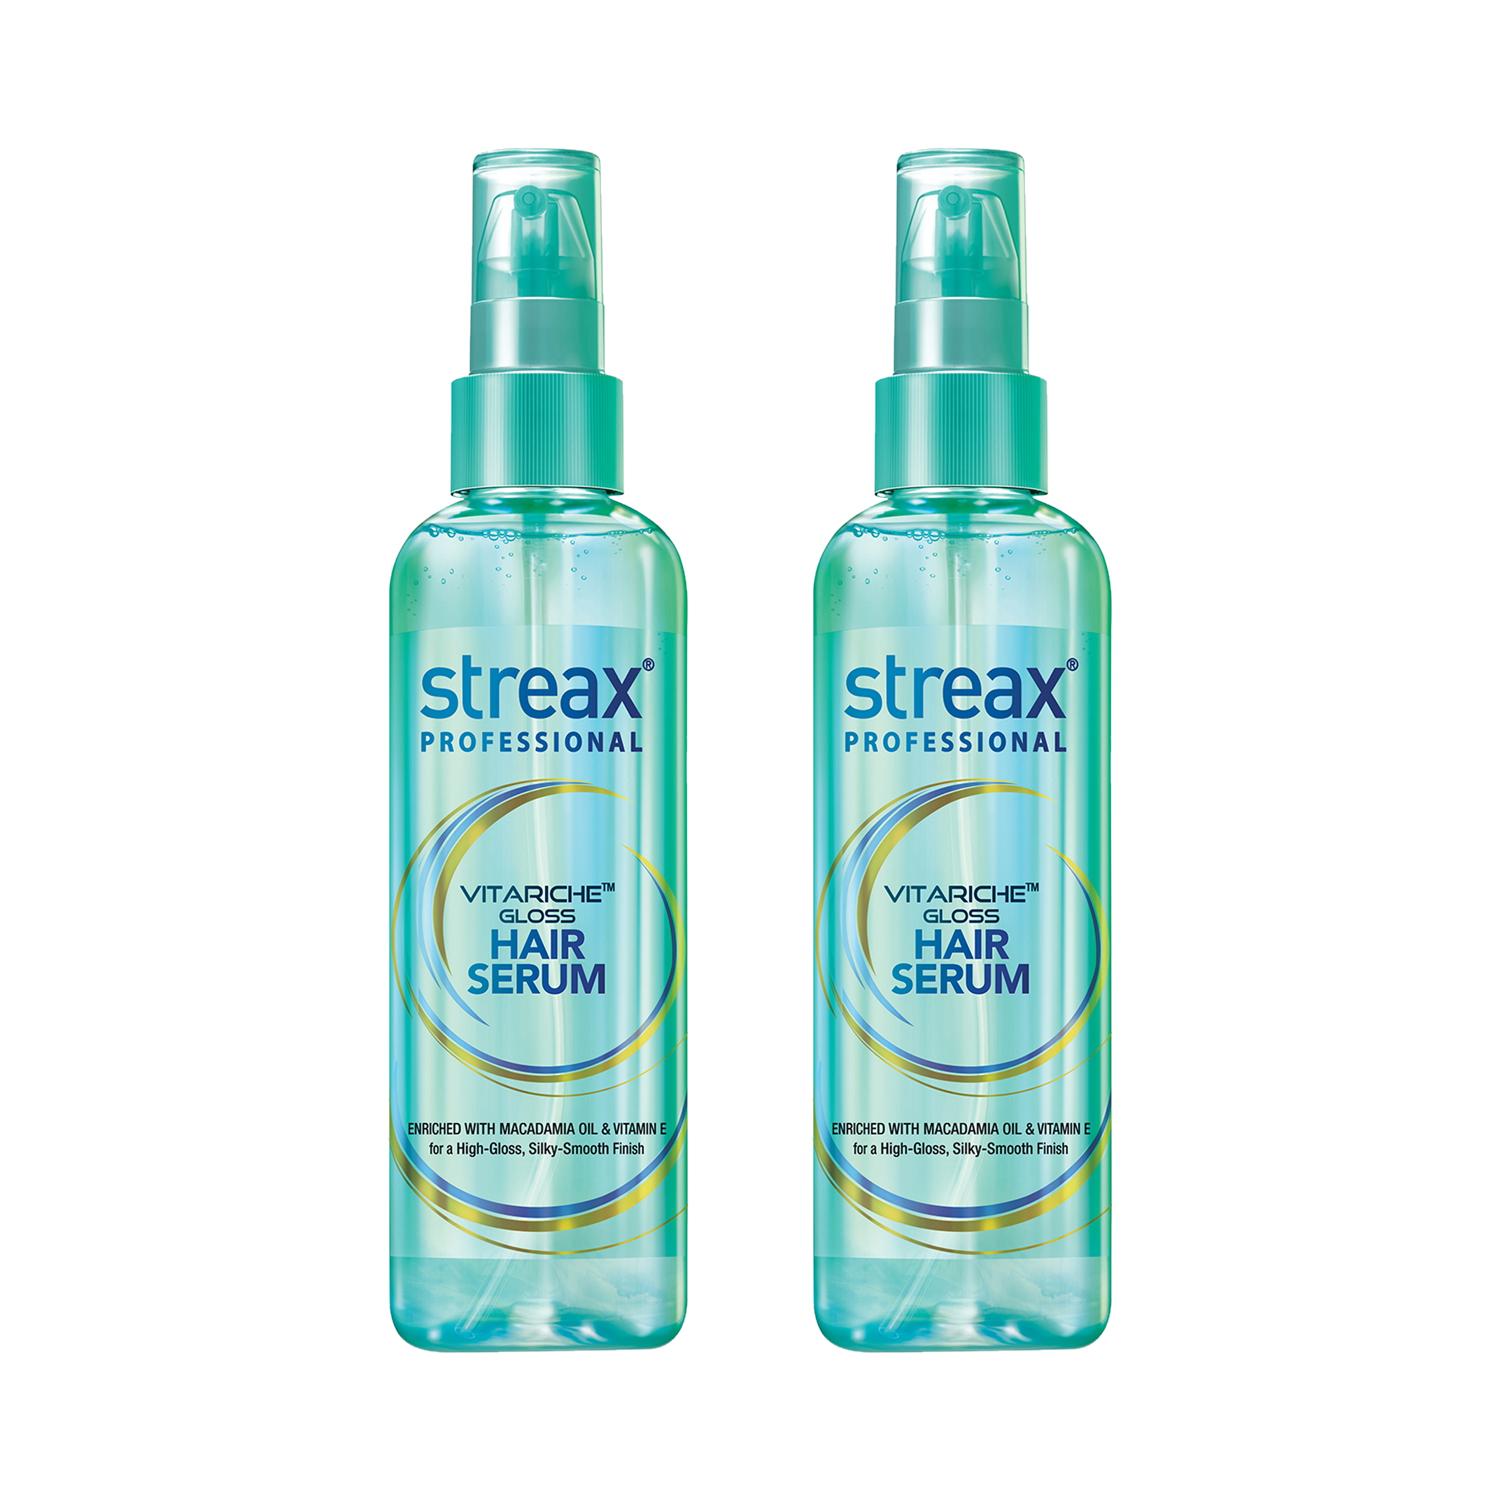 Streax Professional | Streax Professional Vitariche Gloss Hair Serum (115ml) - (Pack of 2) Combo